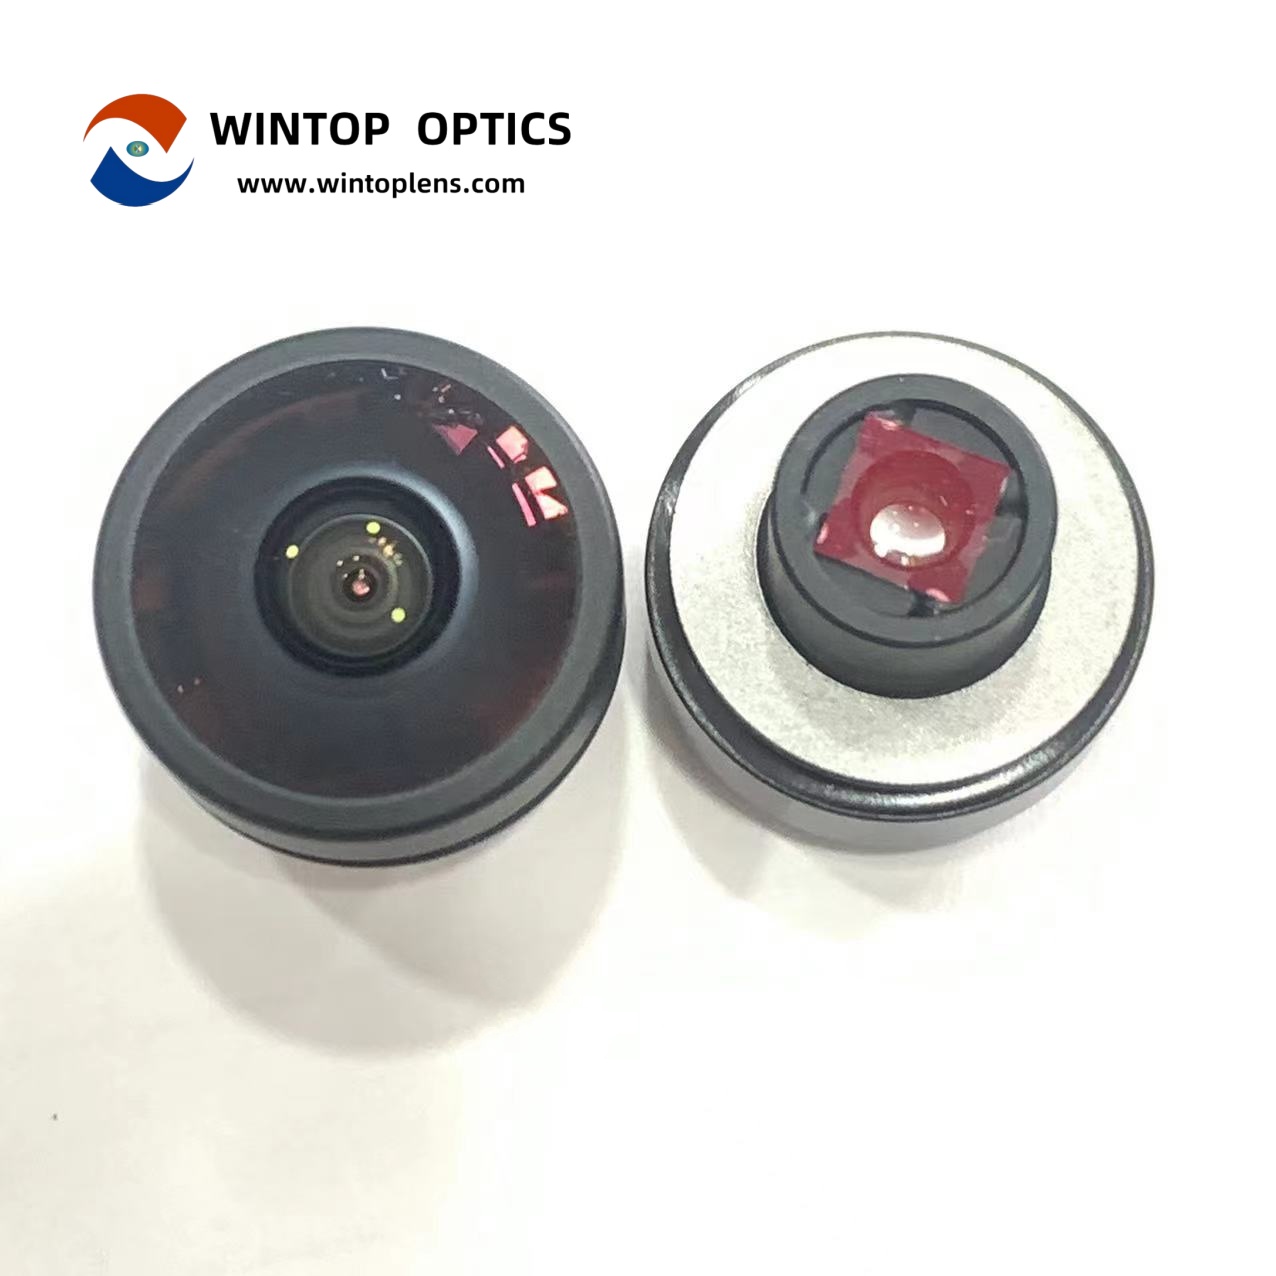 HFOV 200 degree Panoramic Rearview Camera Lens YT-7070-H1-A - WINTOP OPTICS